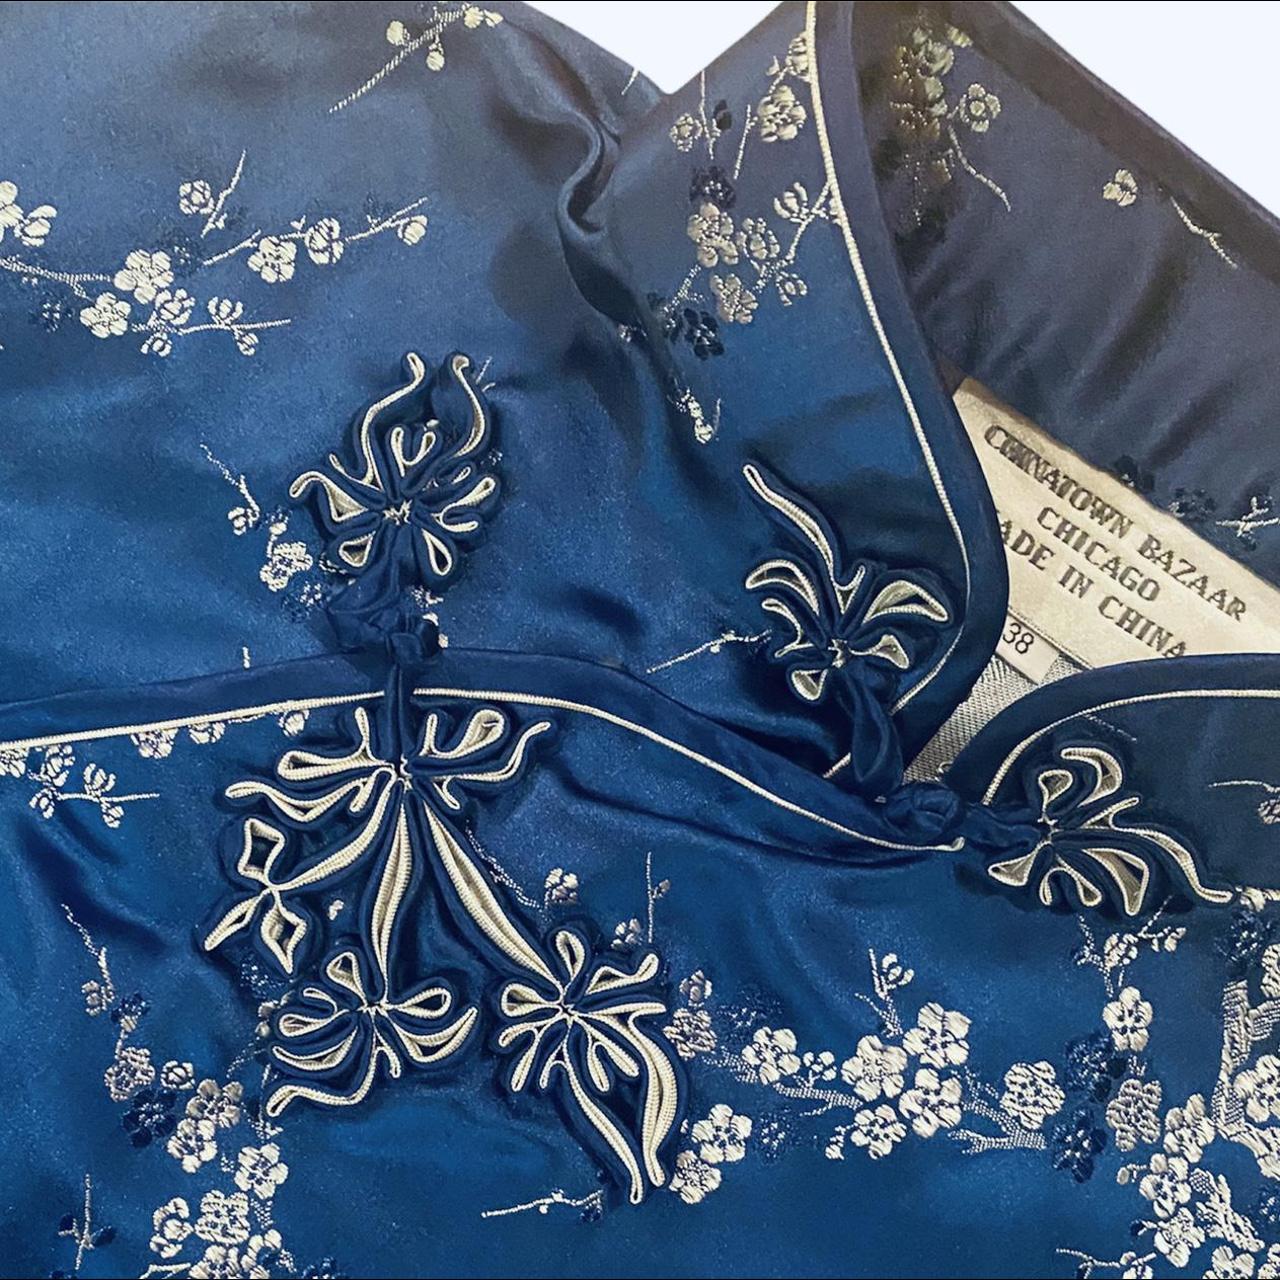 Product Image 2 - Vintage Chinese Cheongsam Dress:
(Short)
Dark Blue